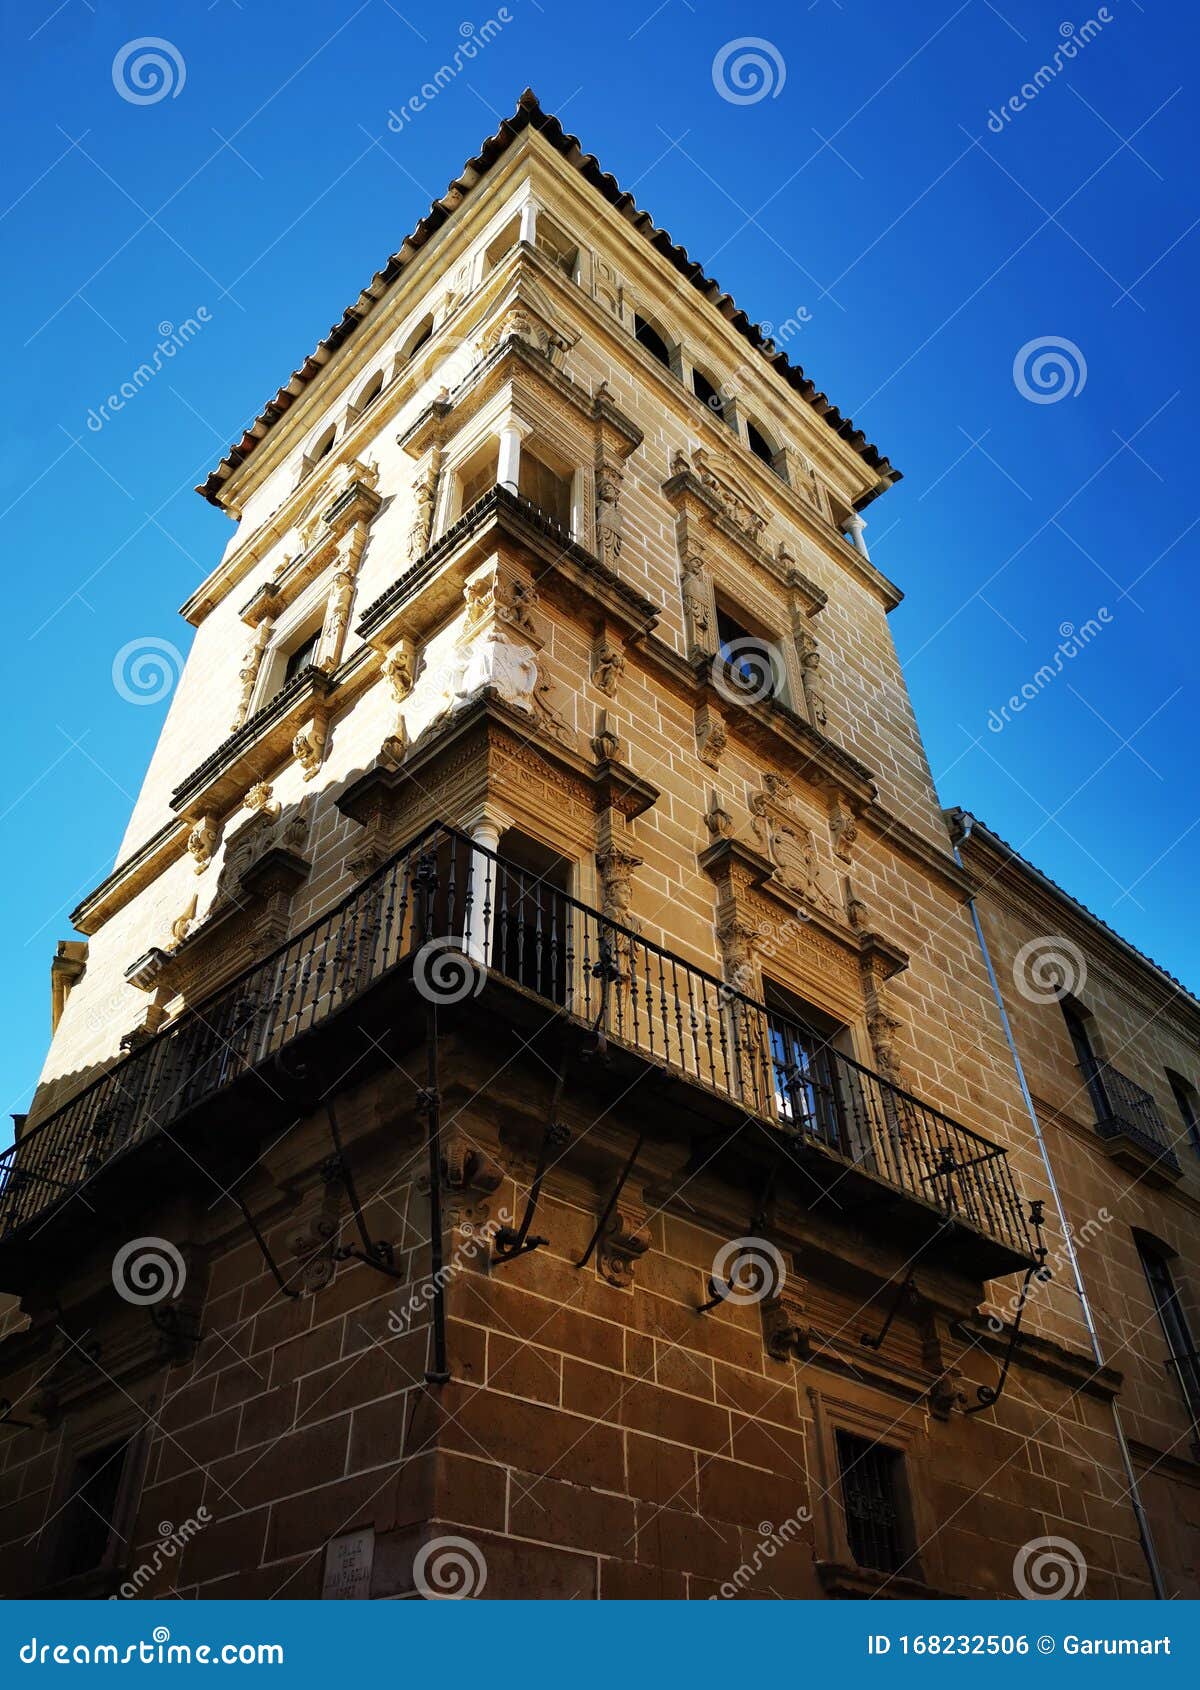 high floors of a 16th century building